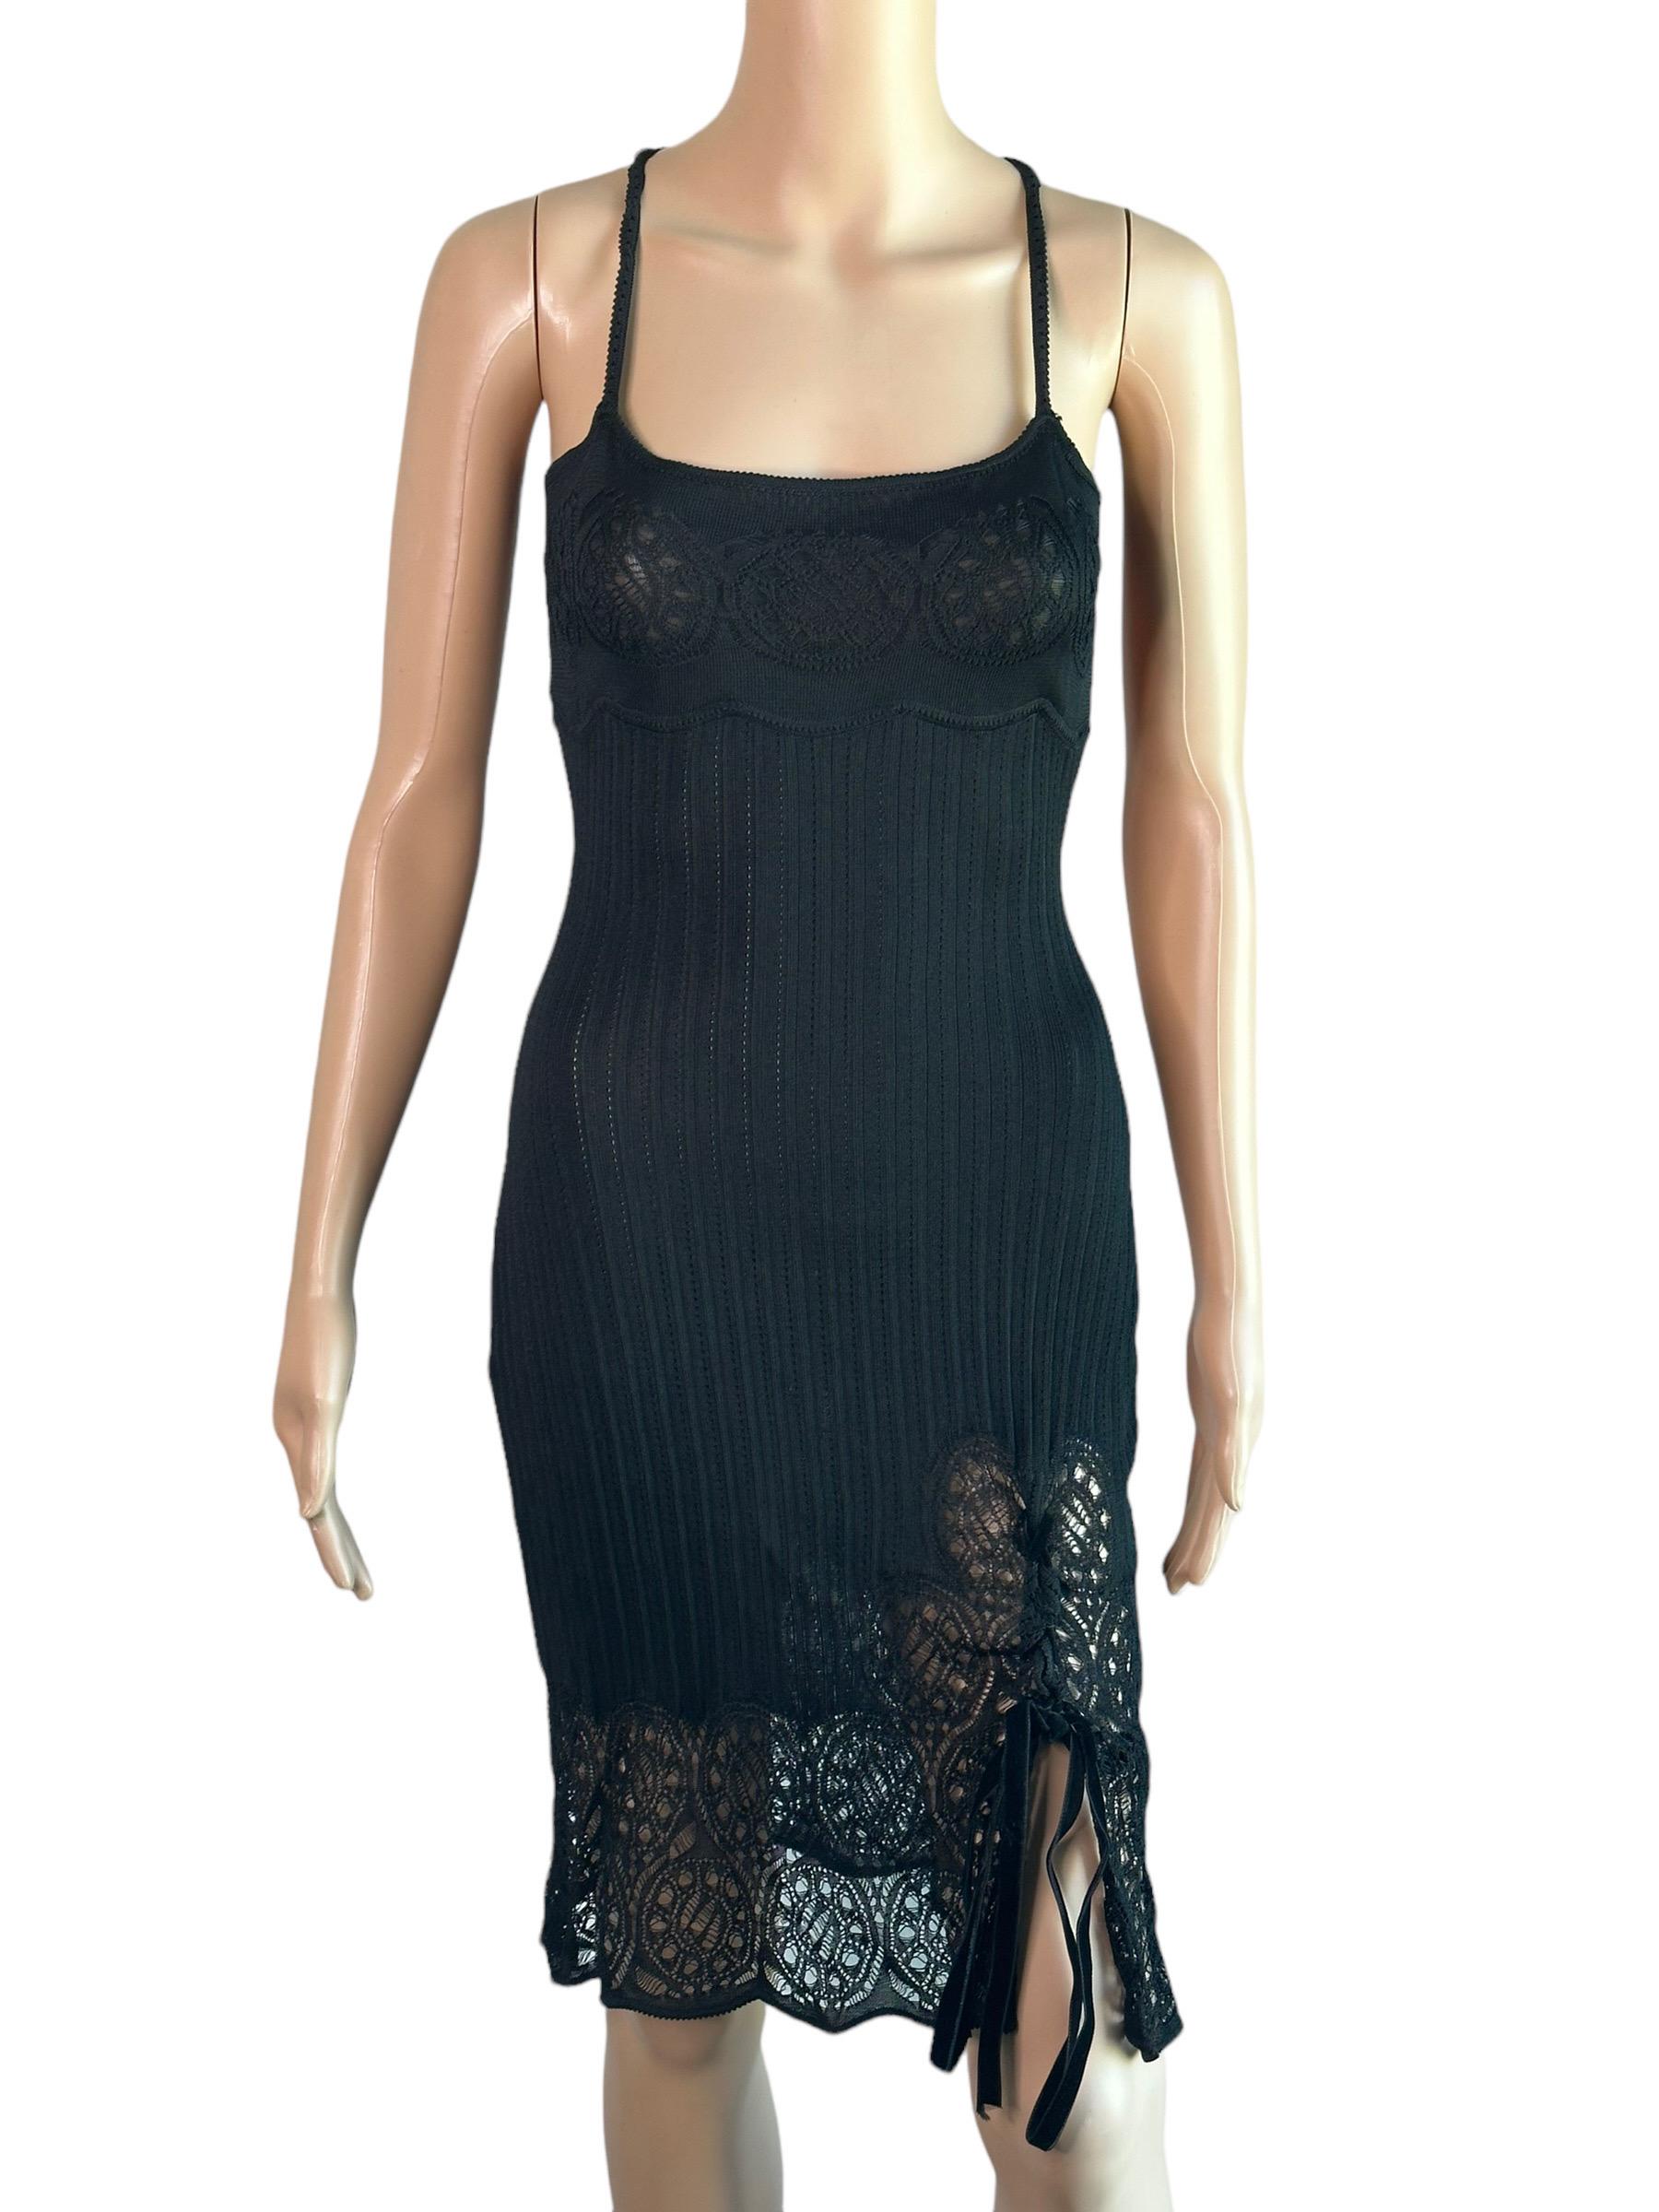 John Galliano S/S 1999 - Mini robe noire en dentelle transparente ouverte en vente 7